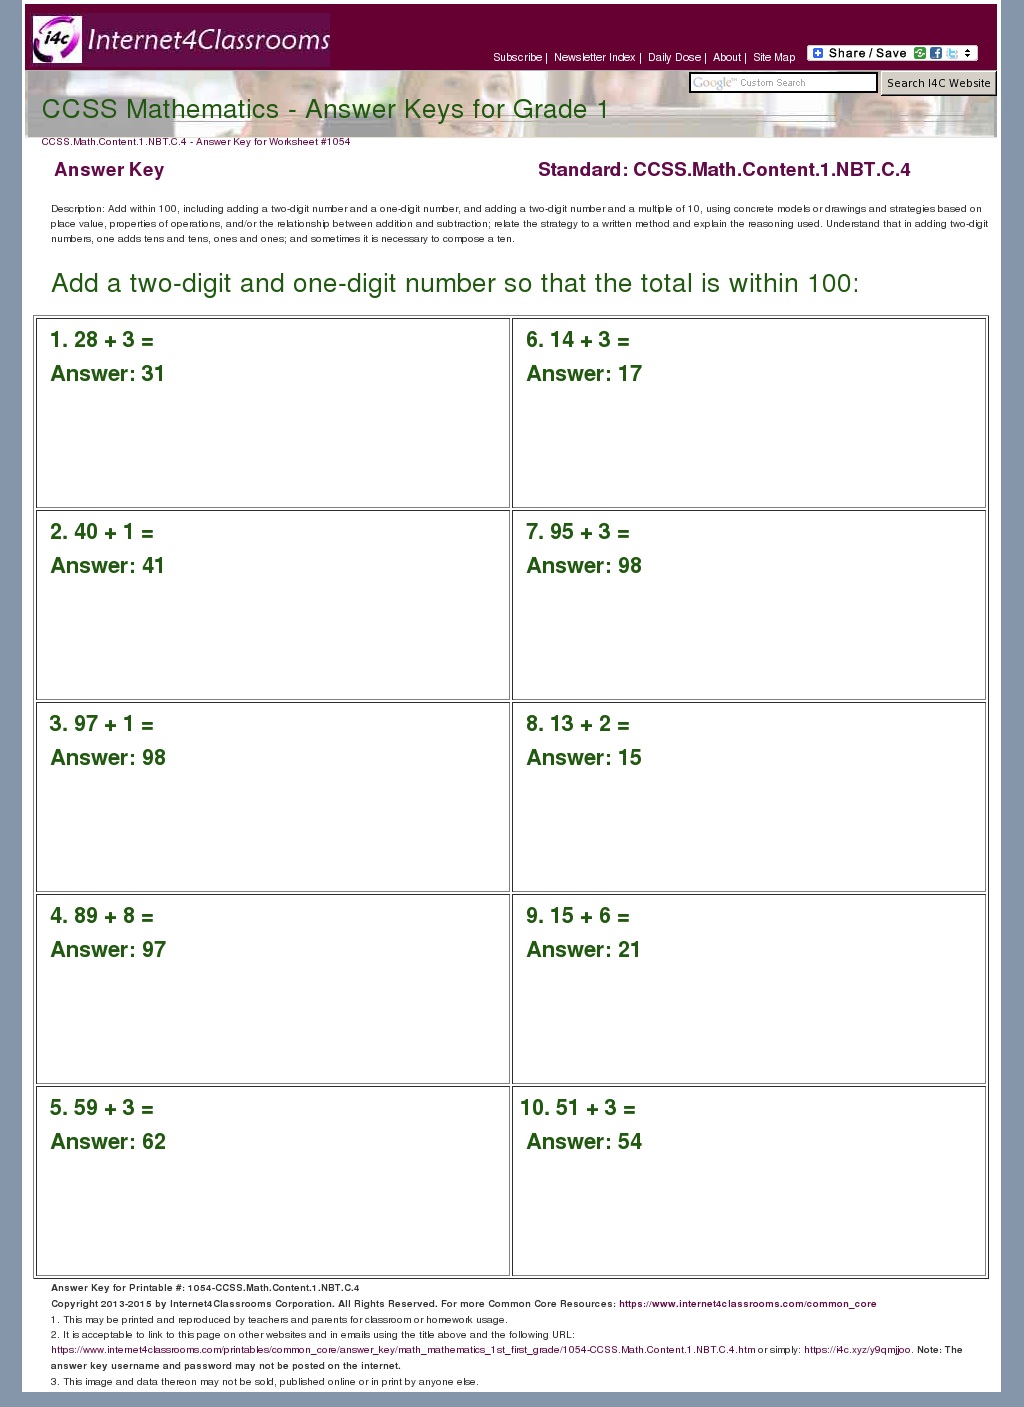 Answer Key Download Worksheet 1054 CCSS Math Content 1 NBT C 4